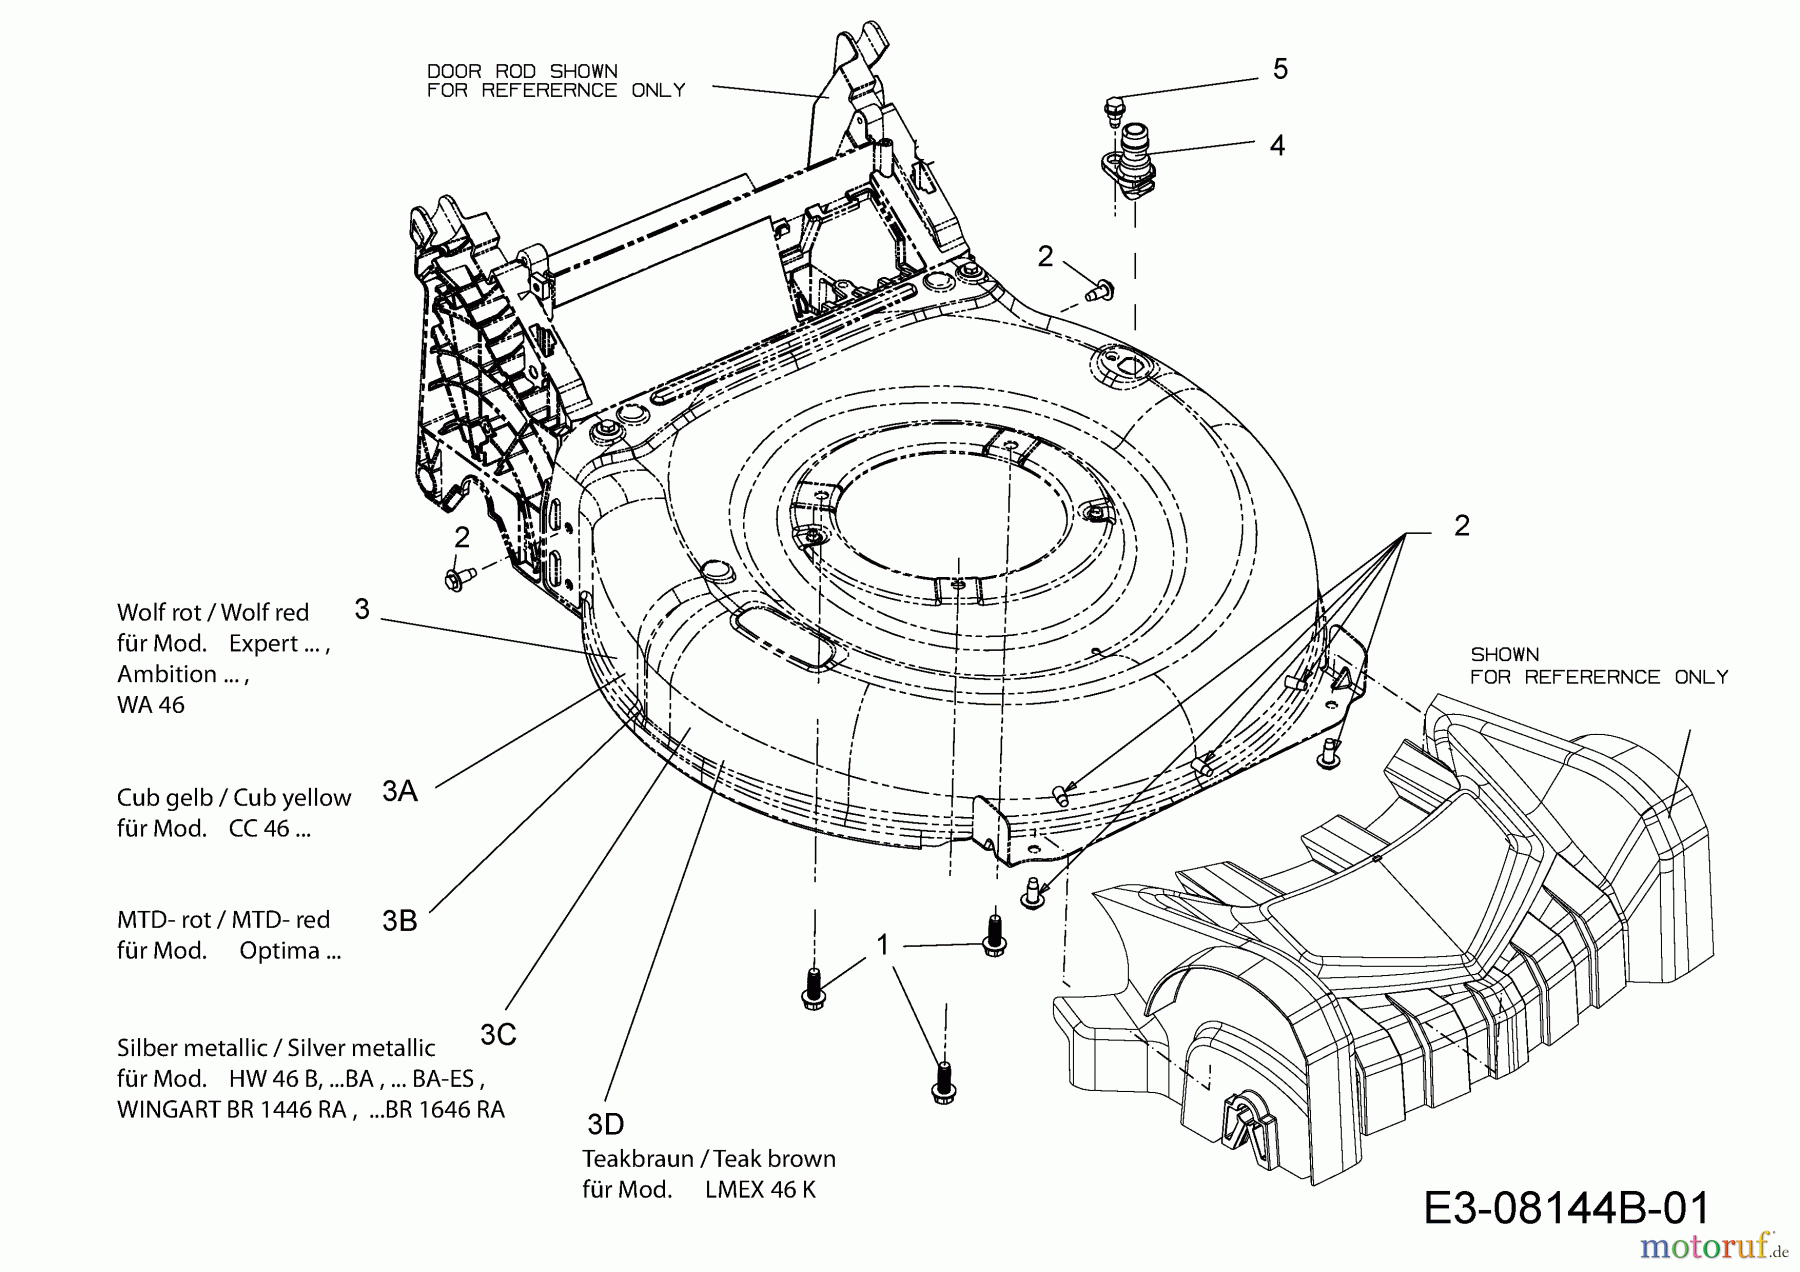  MTD Motormäher mit Antrieb LMEX 46 K 12A-TH7D682  (2015) Mähwerksgehäuse